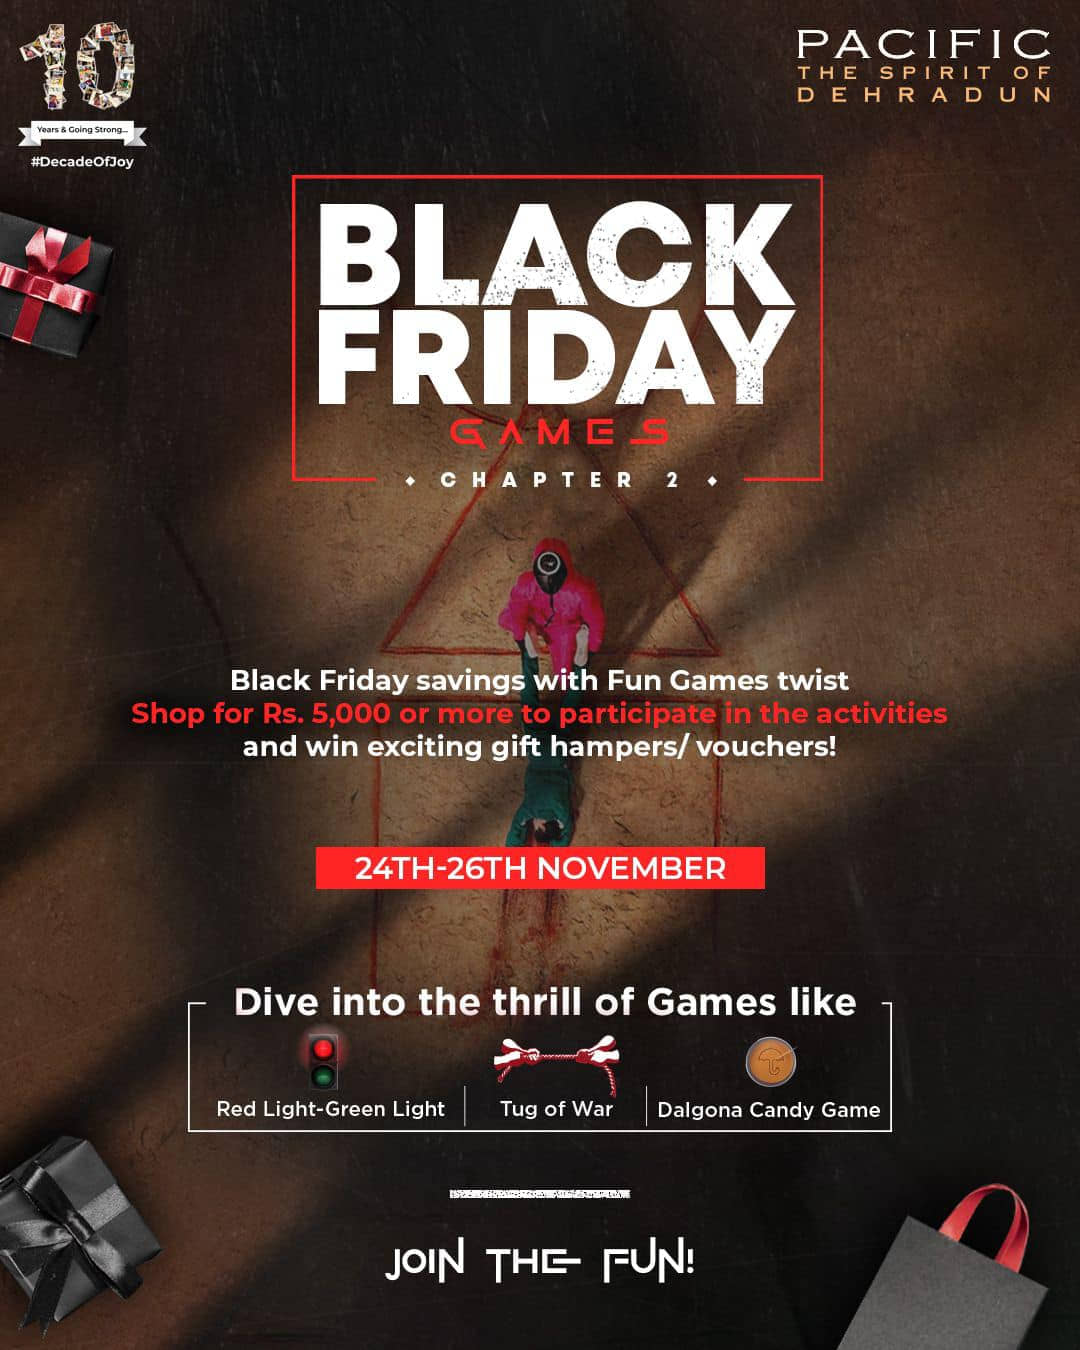 Black Friday Games Chapter 2 at Pacific Mall Dehradun